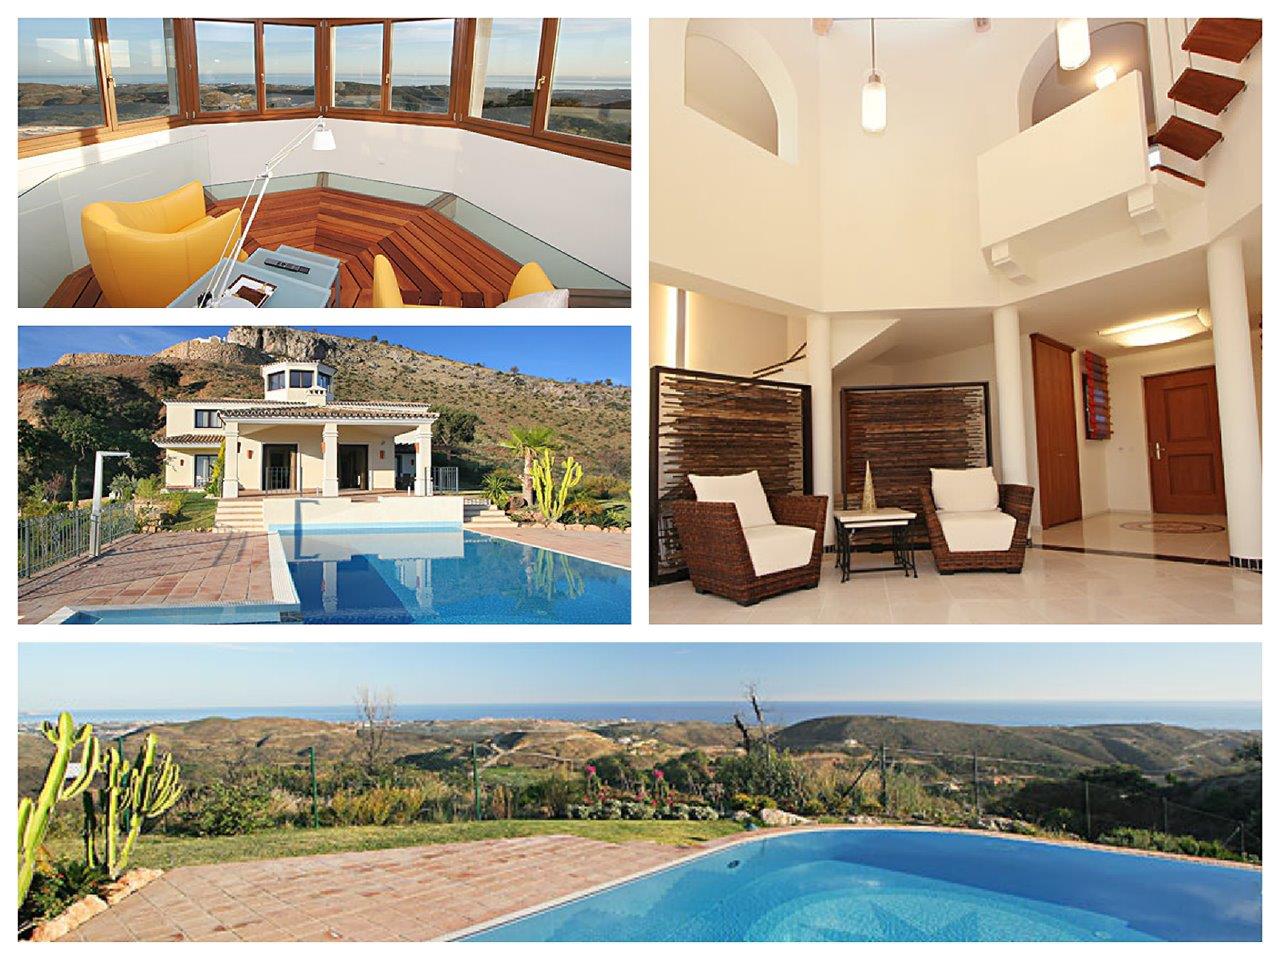 Detached villa in Benahavis for sale (Marbella Club Golf Resort)